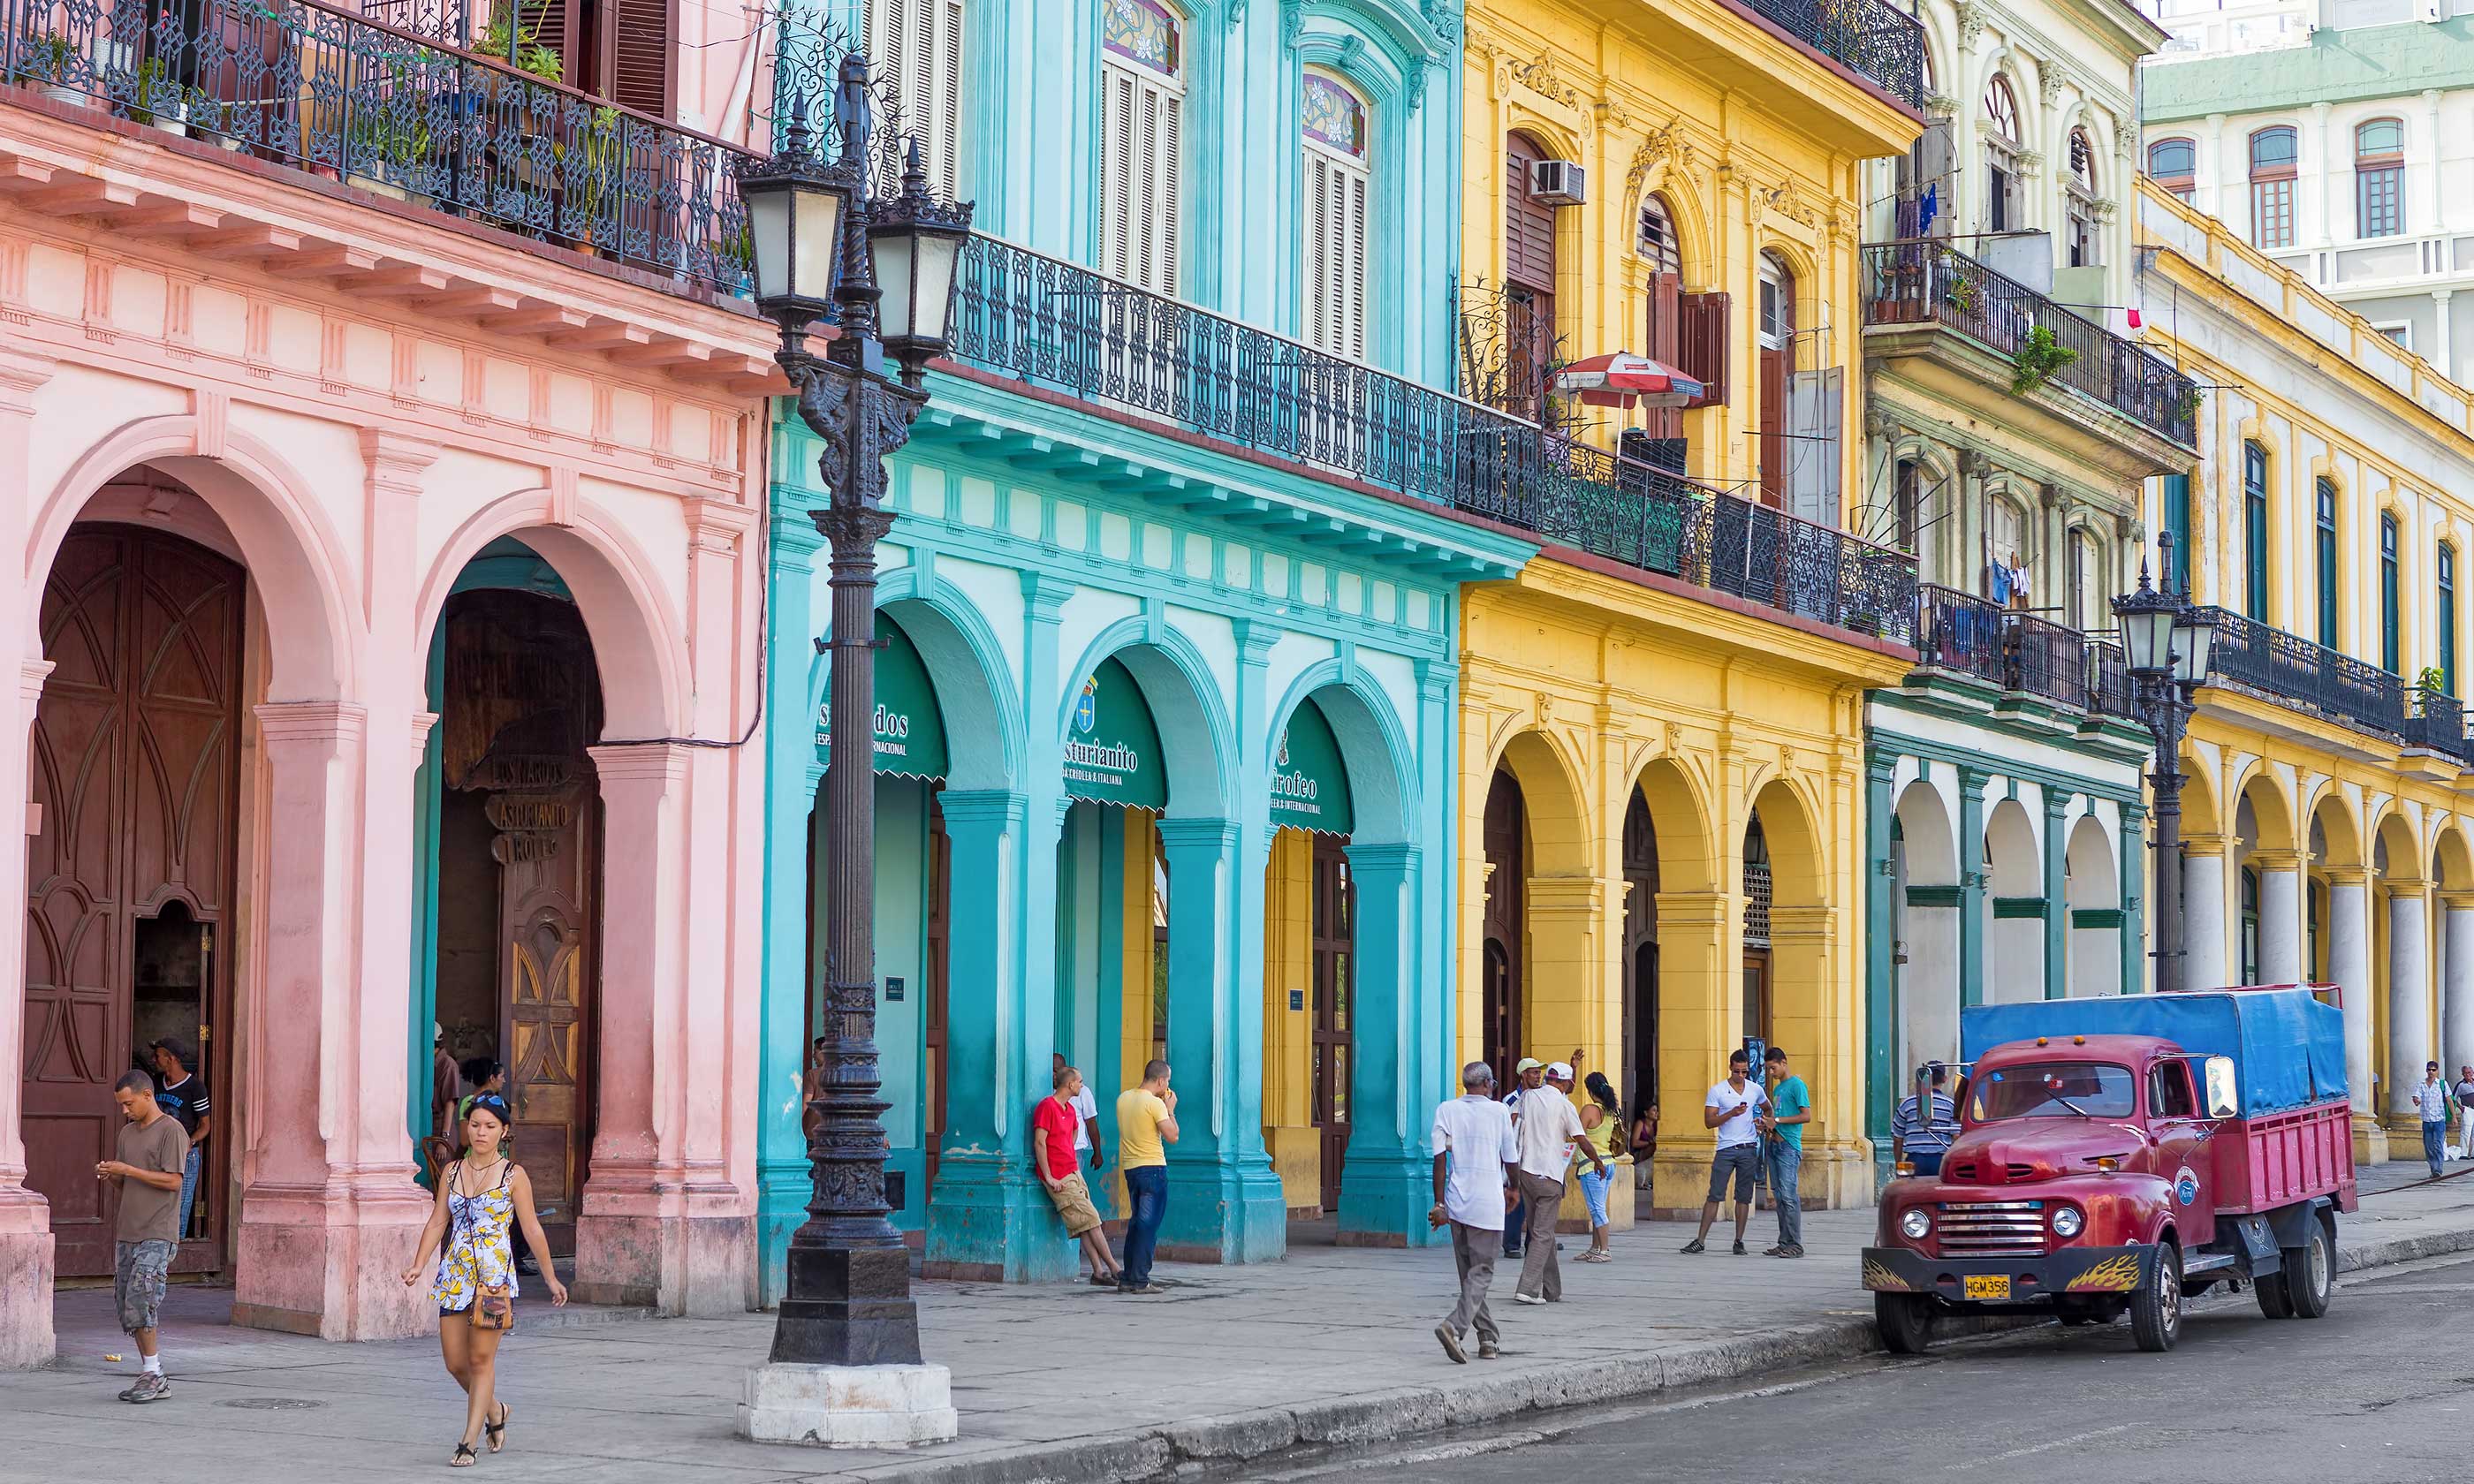 Havana street scene (Shutterstock: see full credit below)